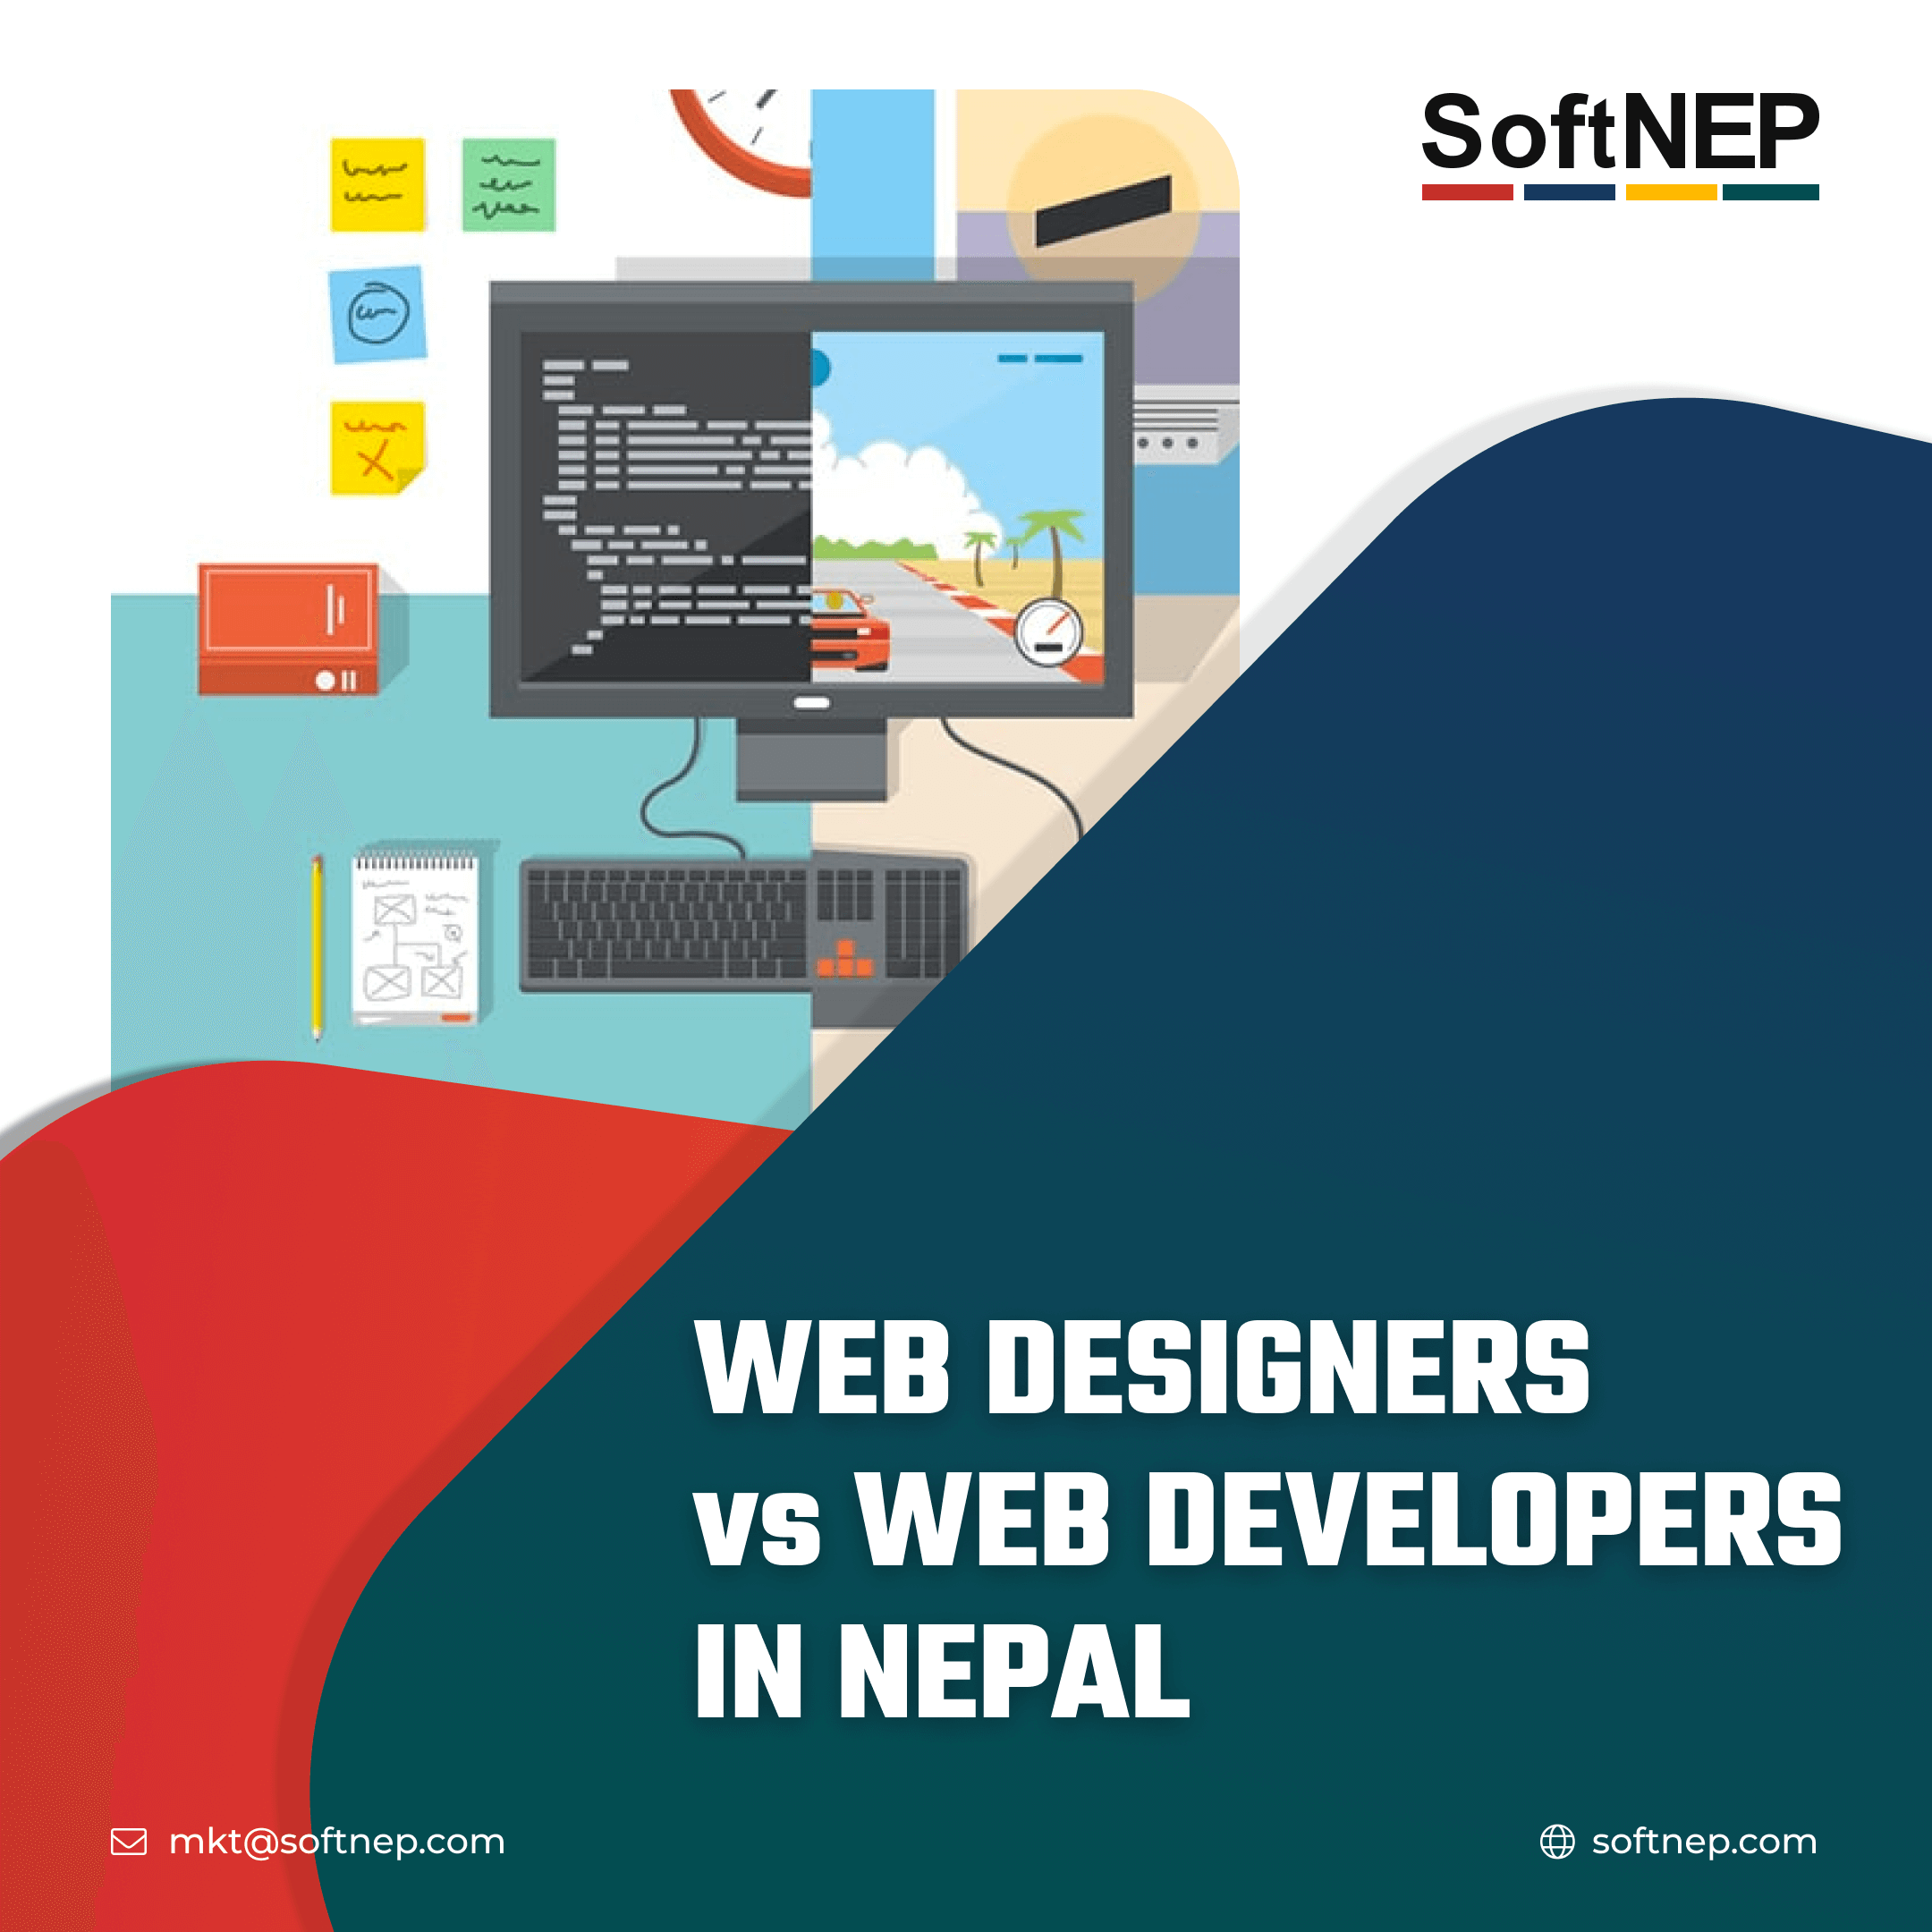 Web Designers vs Web Developers in Nepal